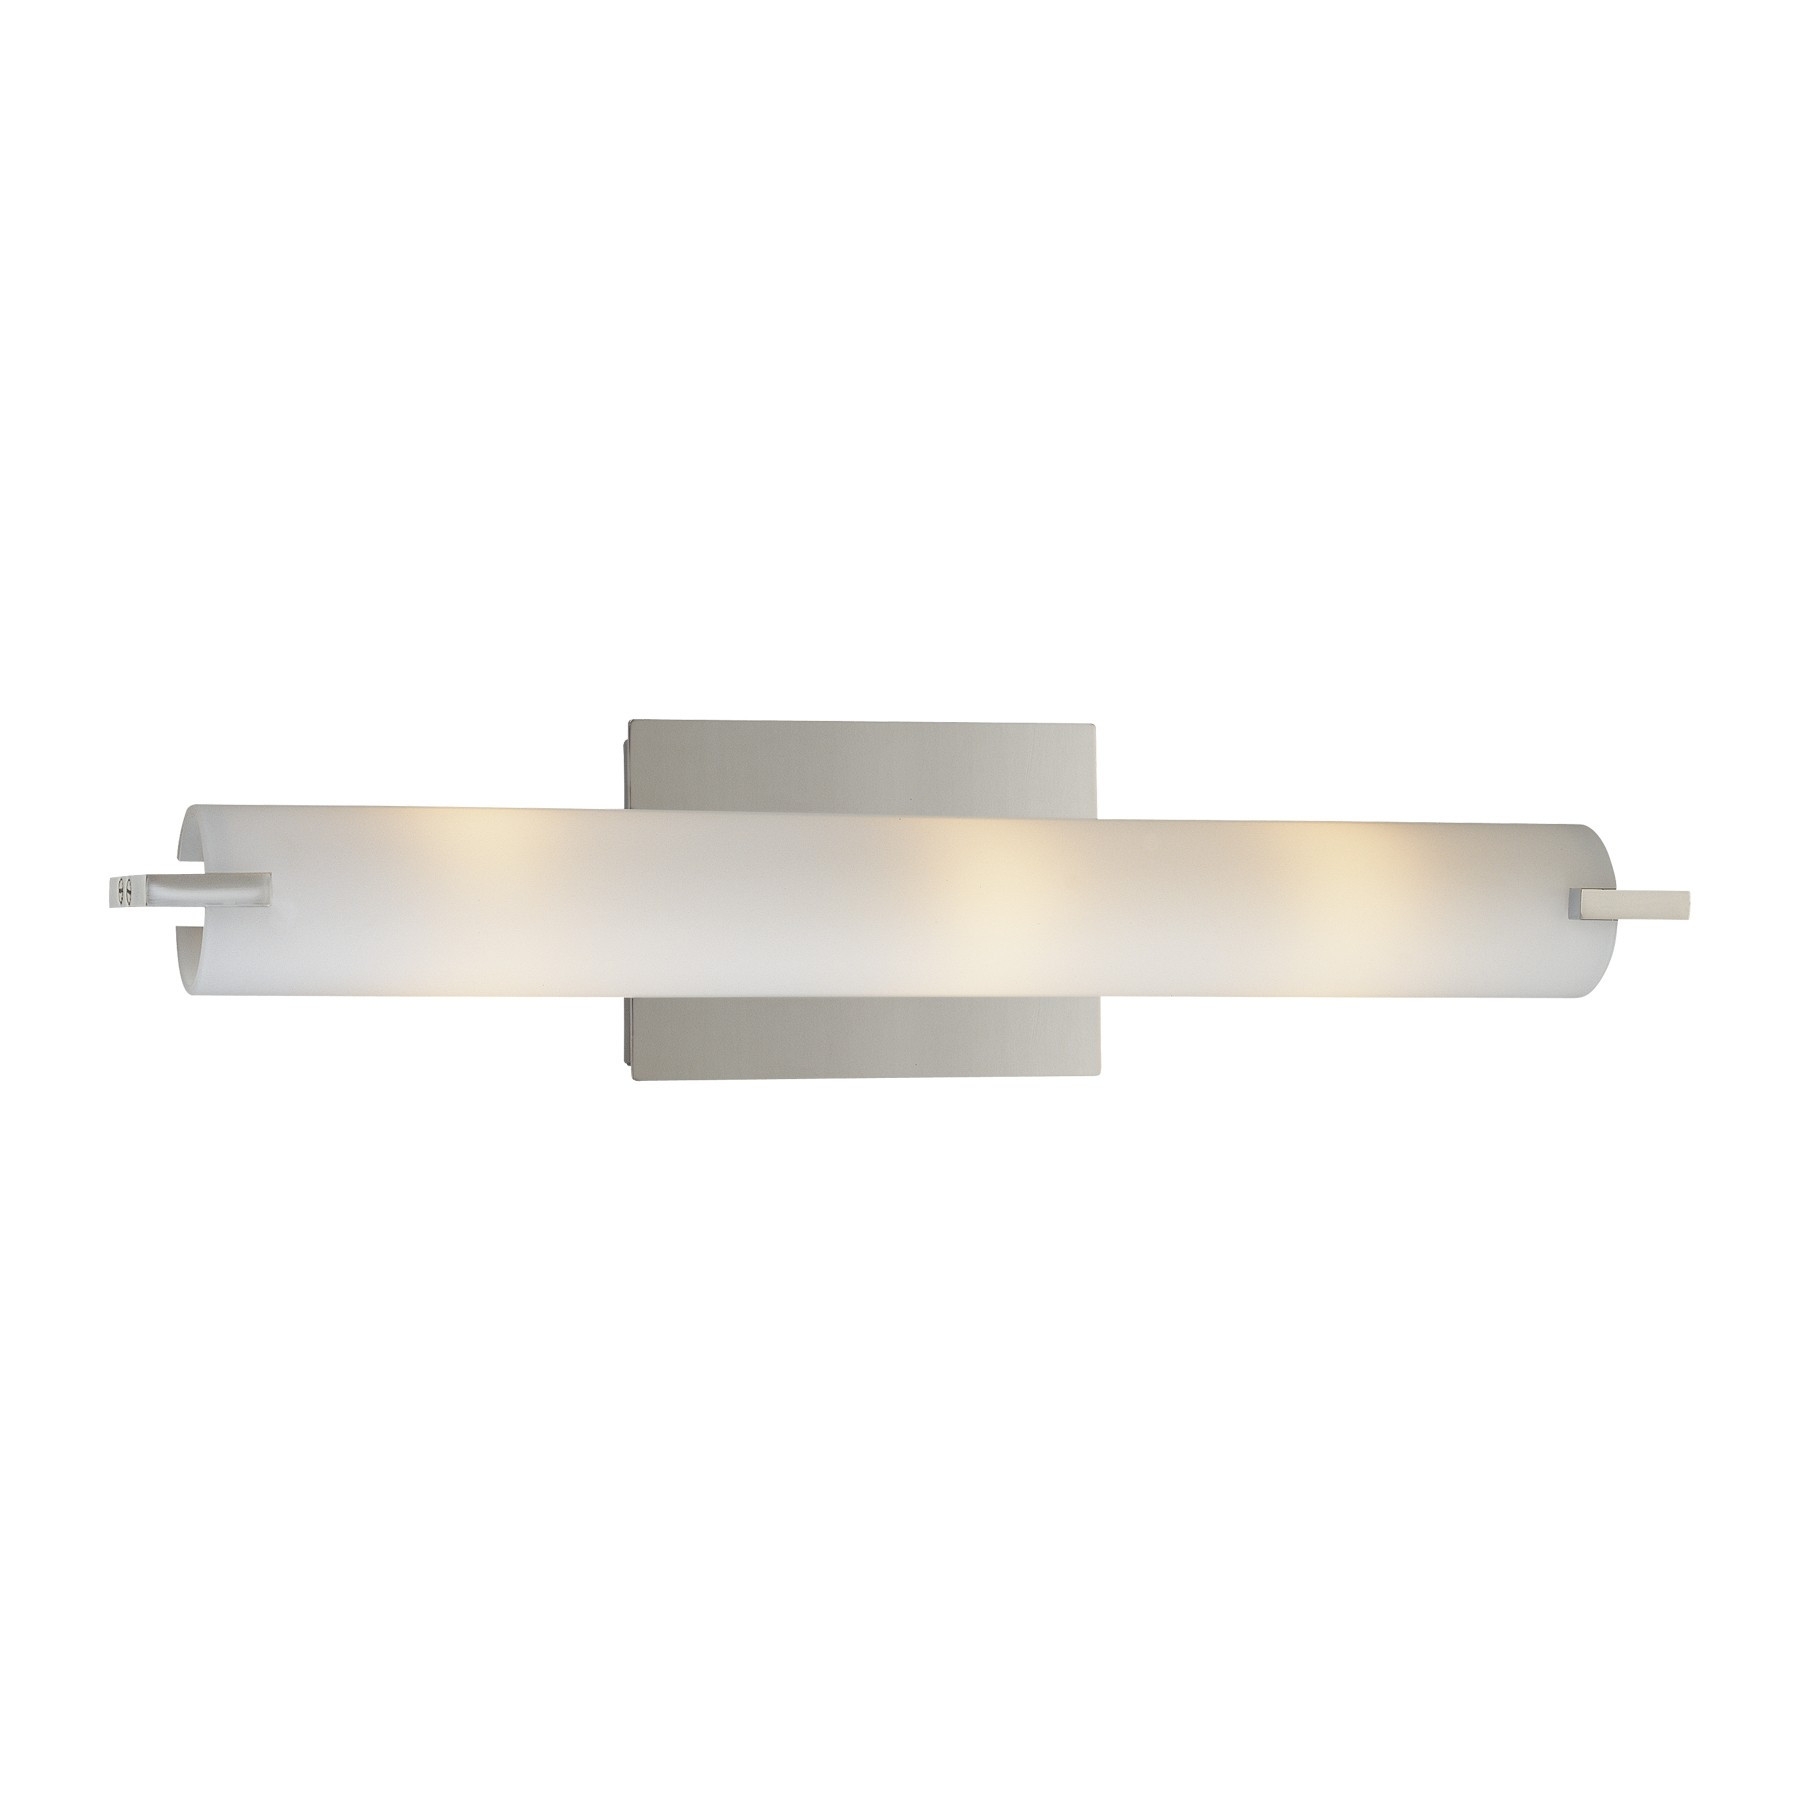 Best ideas about Bathroom Light Bar
. Save or Pin Amusing Bath Bar Light 2017 Design – led vanity light Now.